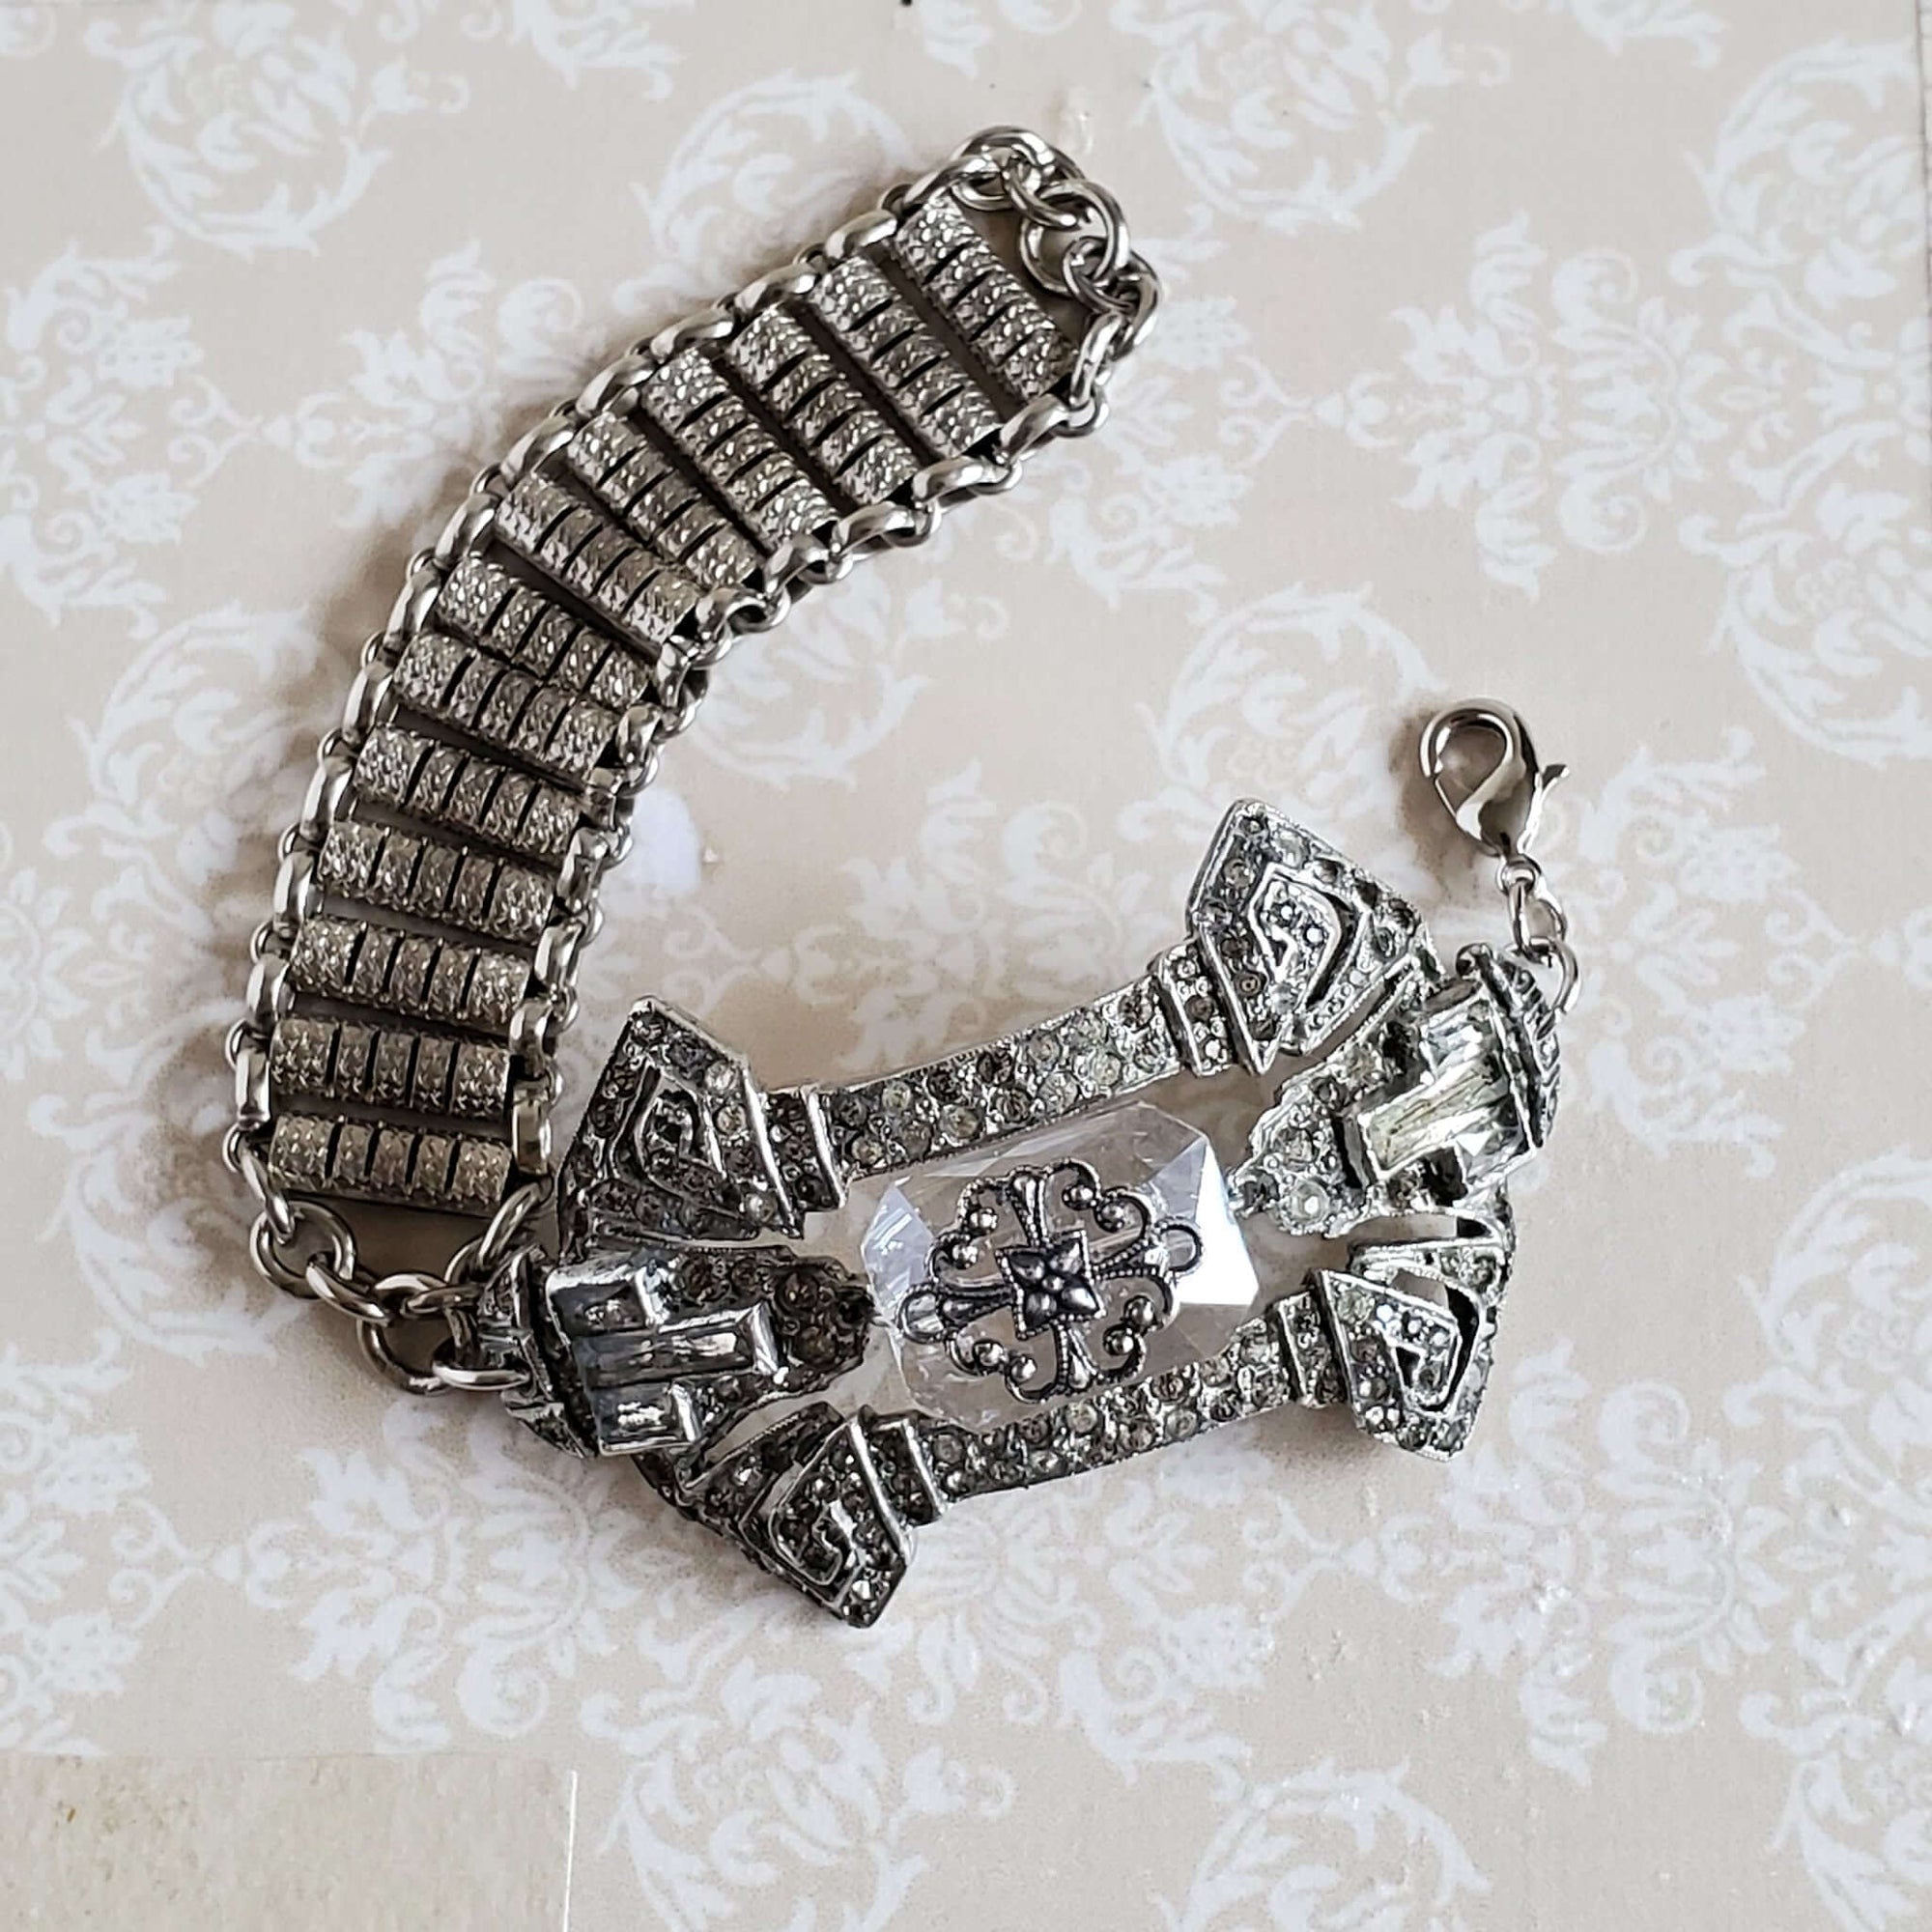 Antique Art Deco Bracelet with an Antique Repurposed Metal Strap Fob 